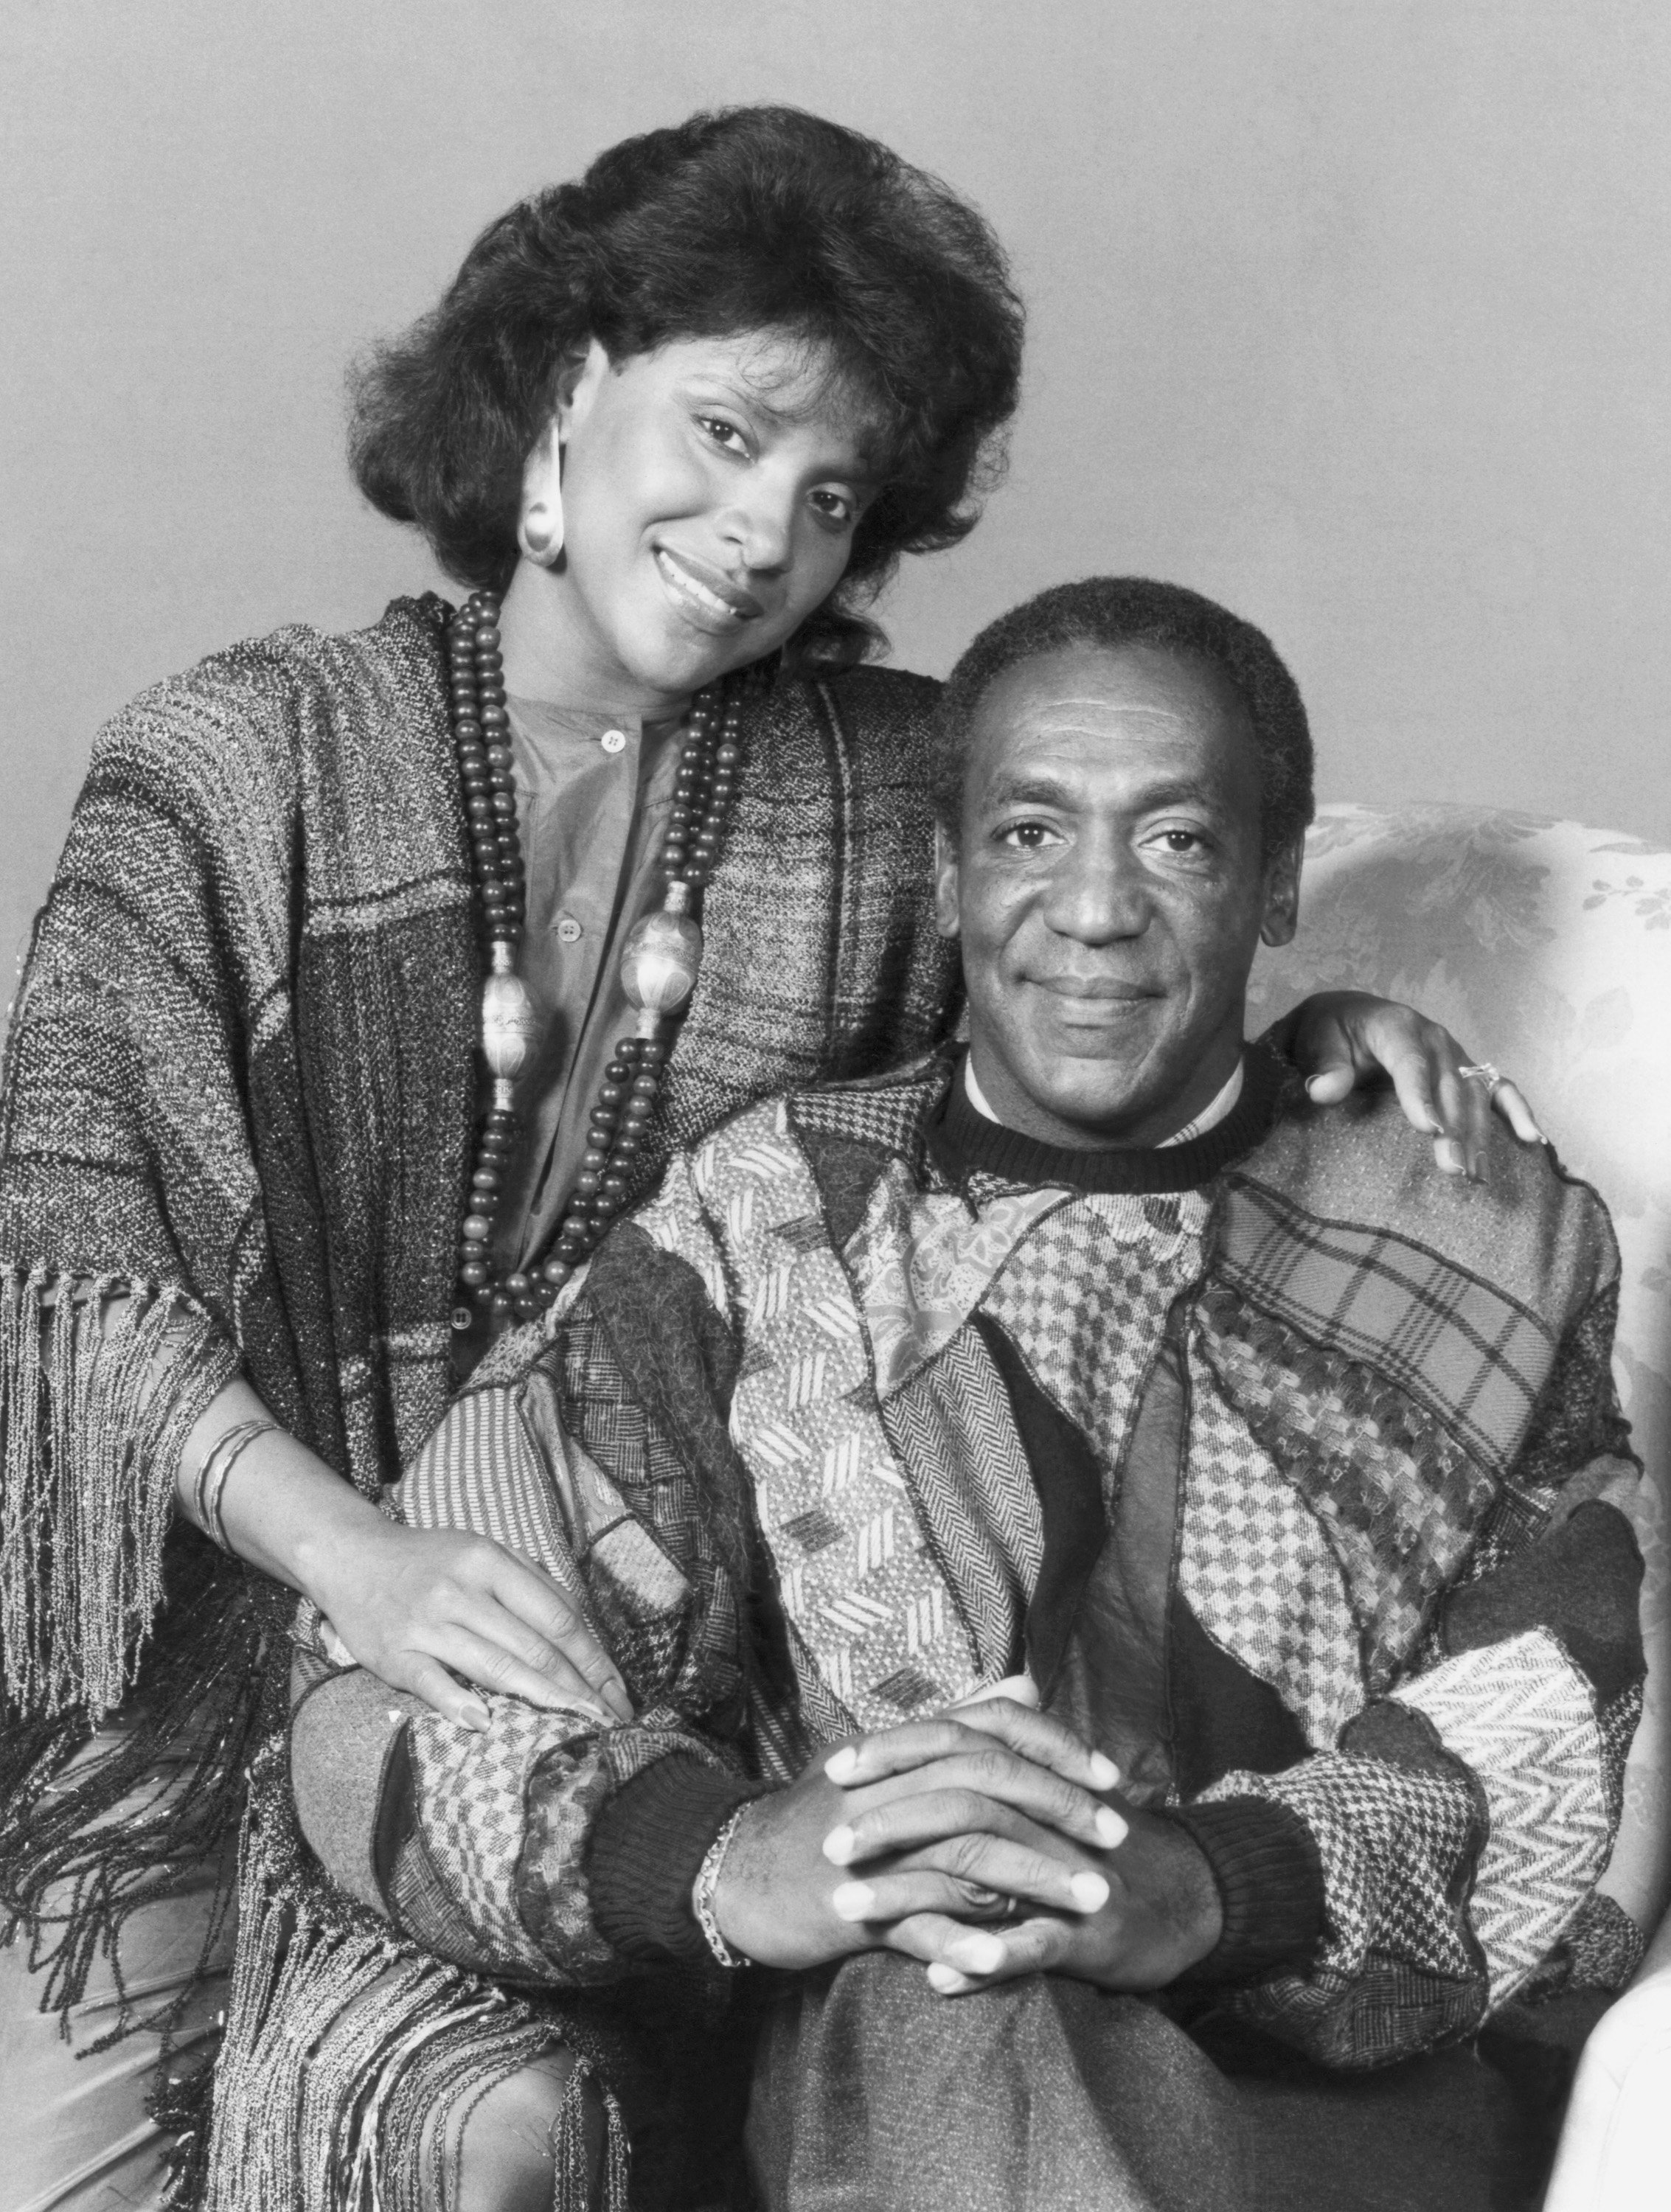 Phylicia Rashad como Clair Hanks Huxtable, Bill Cosby como Dr. Heathcliff 'Cliff' Huxtable en "The Cosby Show". | Foto: GettyImages